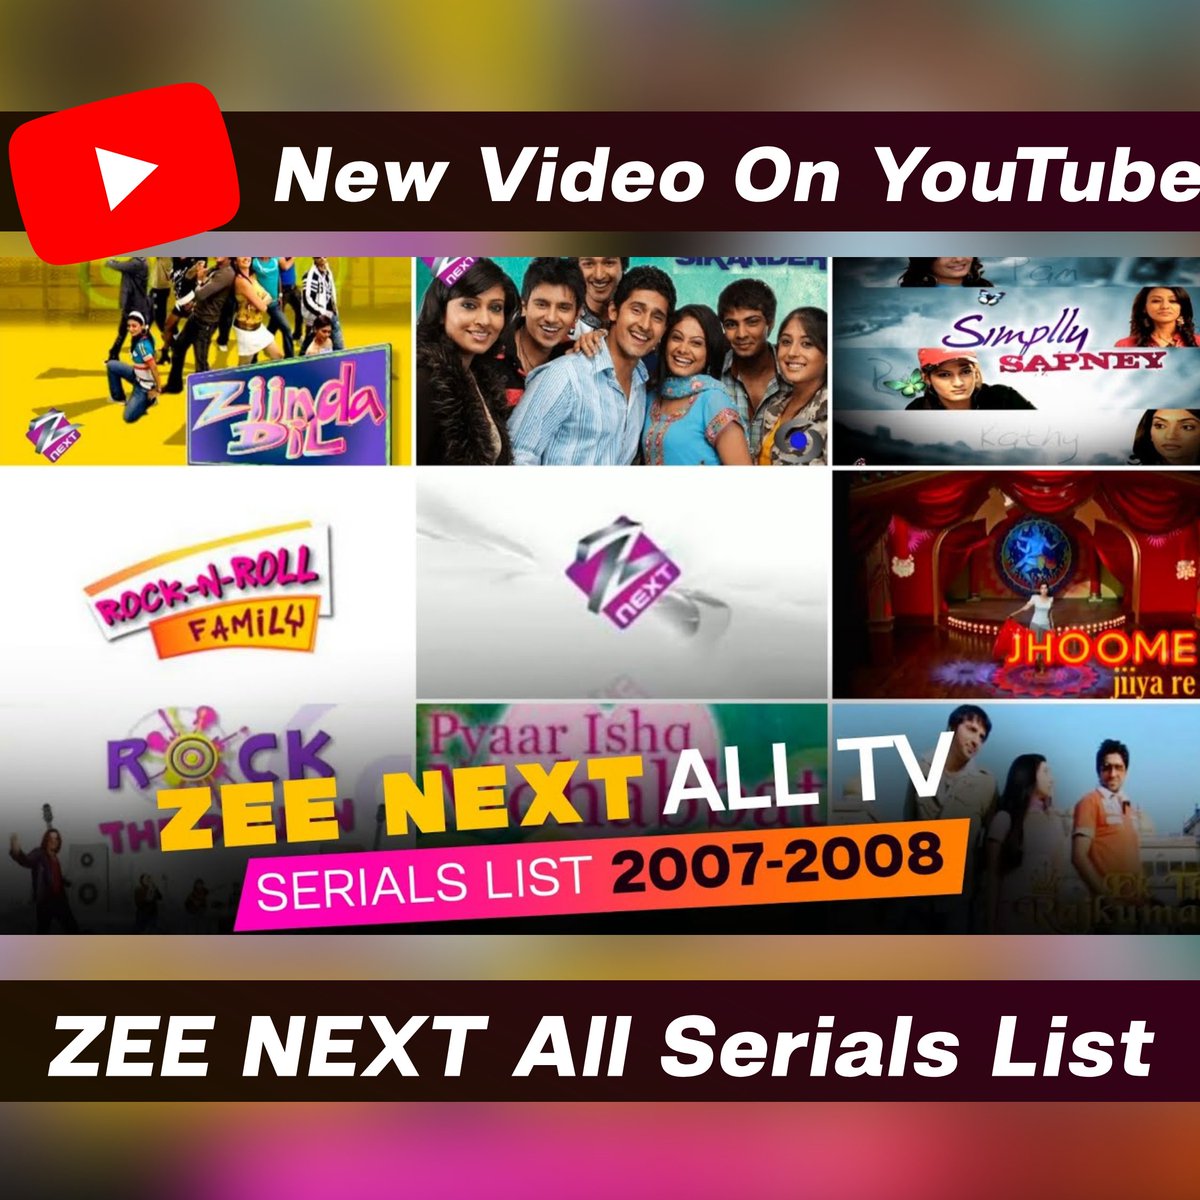 Watch Now:- youtu.be/-G-ASx2Dqyw
ZEE NEXT All Tv Serials List 

#ZeeNext #ZeeTv #AndTv #ZeeAnmol #Zee5 #TvSerial #Oldserial #Aayushmankhurana #Nehamarda #Ravidubey #VioJashn